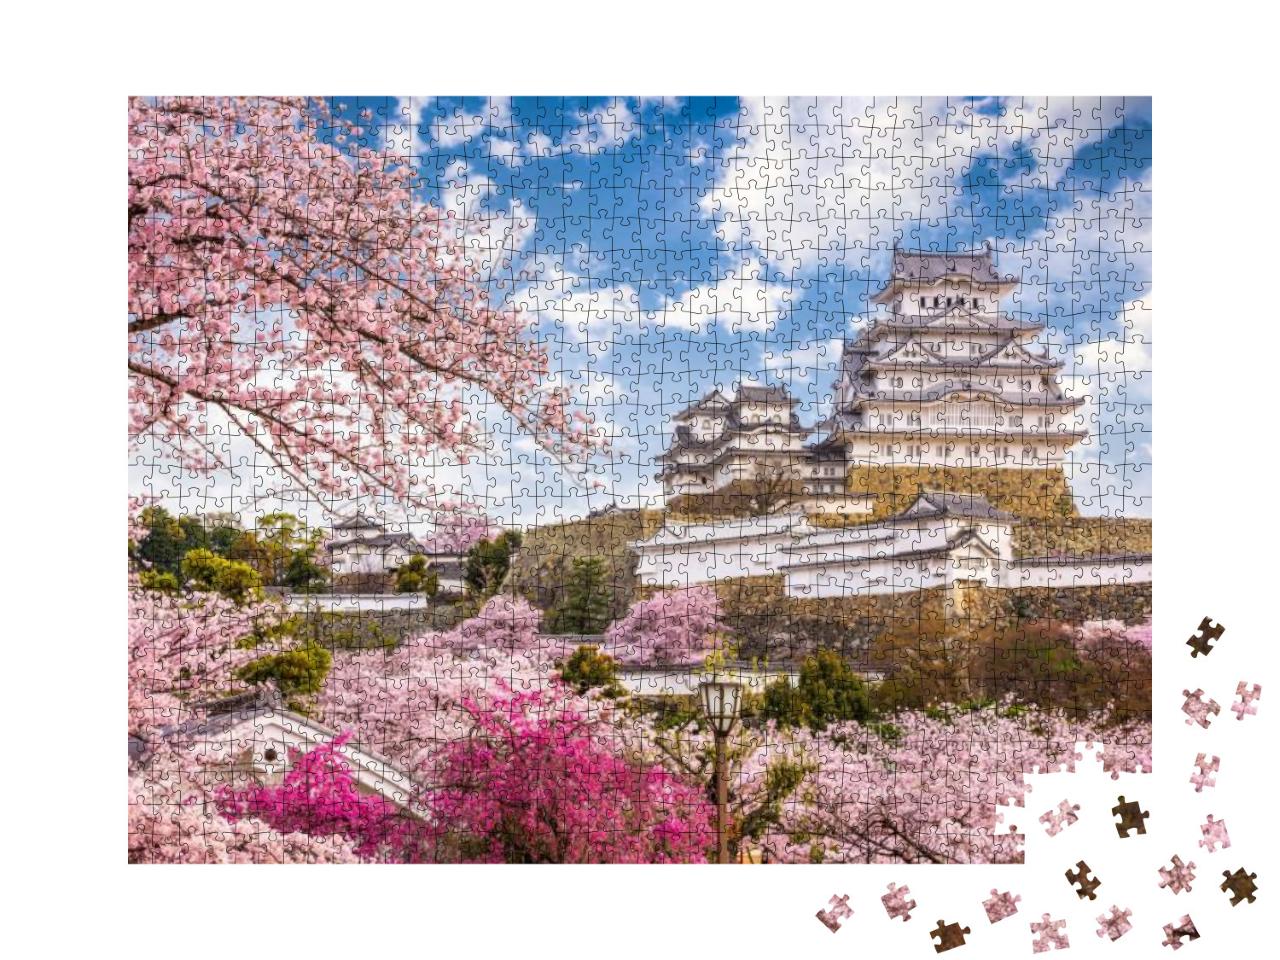 Puzzle 1000 Teile „Kirschblüte an der Burg Himeji im Frühling, Japan“